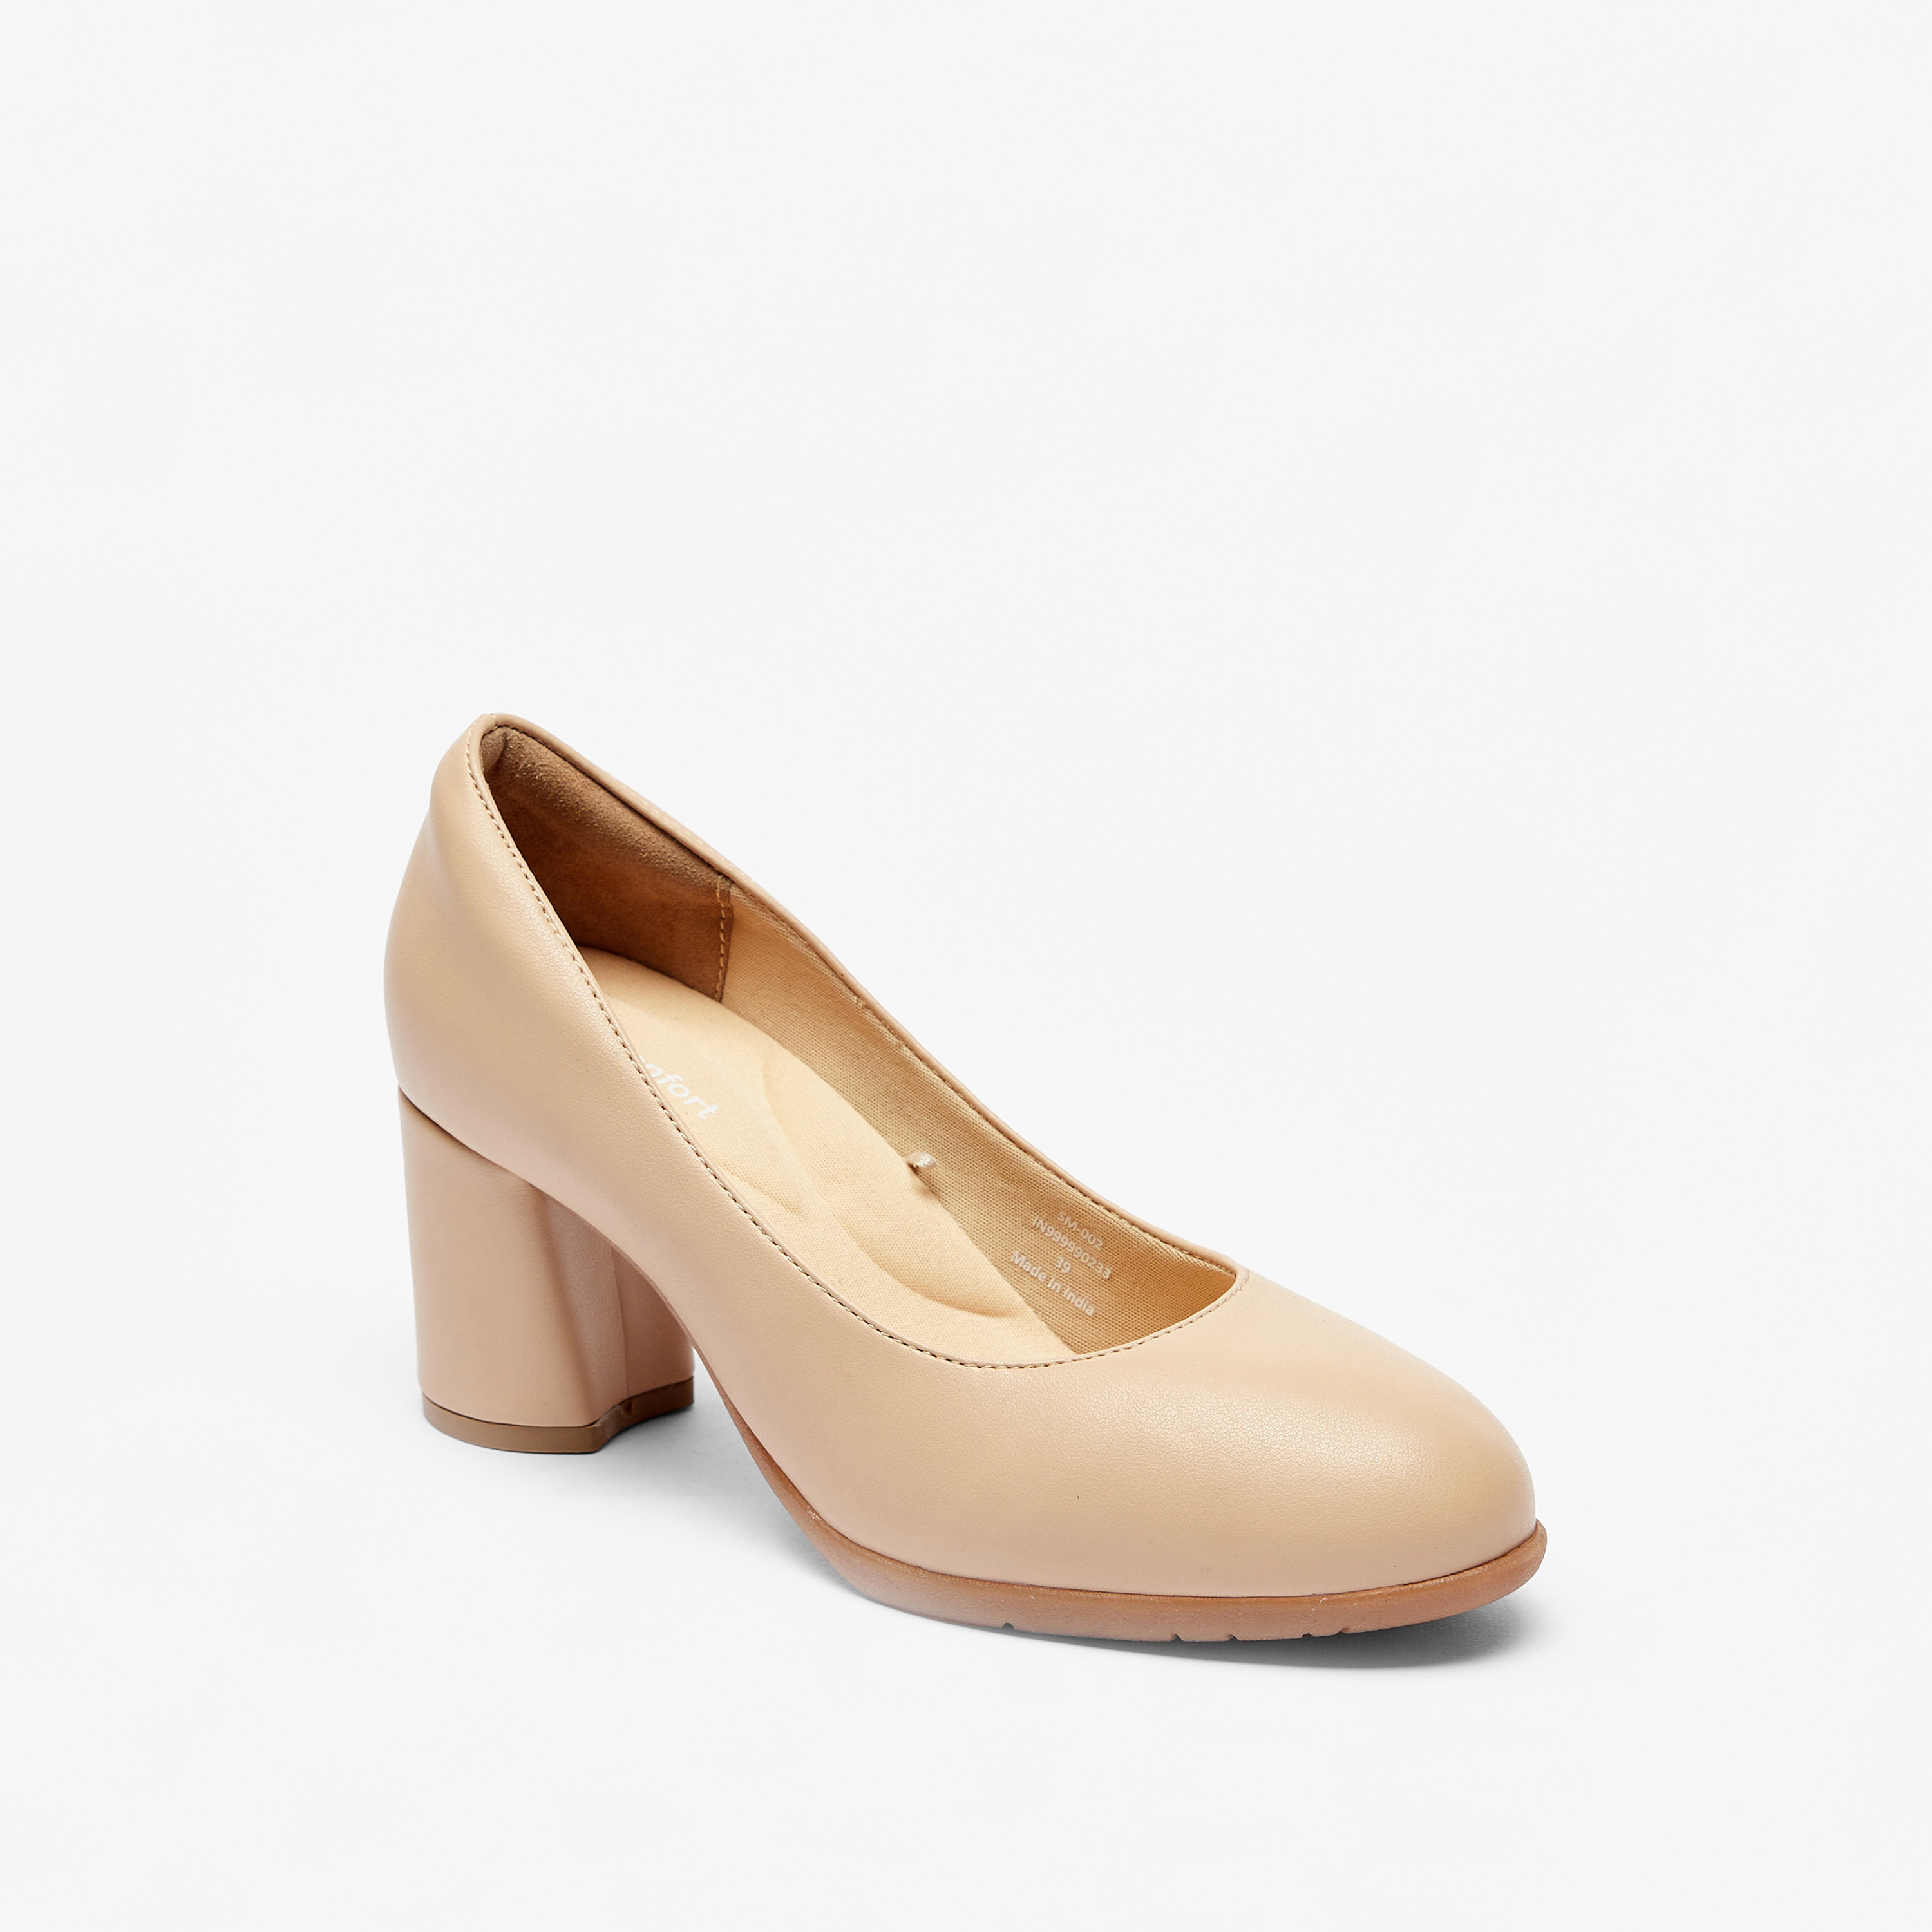 Copper Women Sandals With Heels | WalkTrendy at Rs 385 | High Heel Sandal |  ID: 25570126348